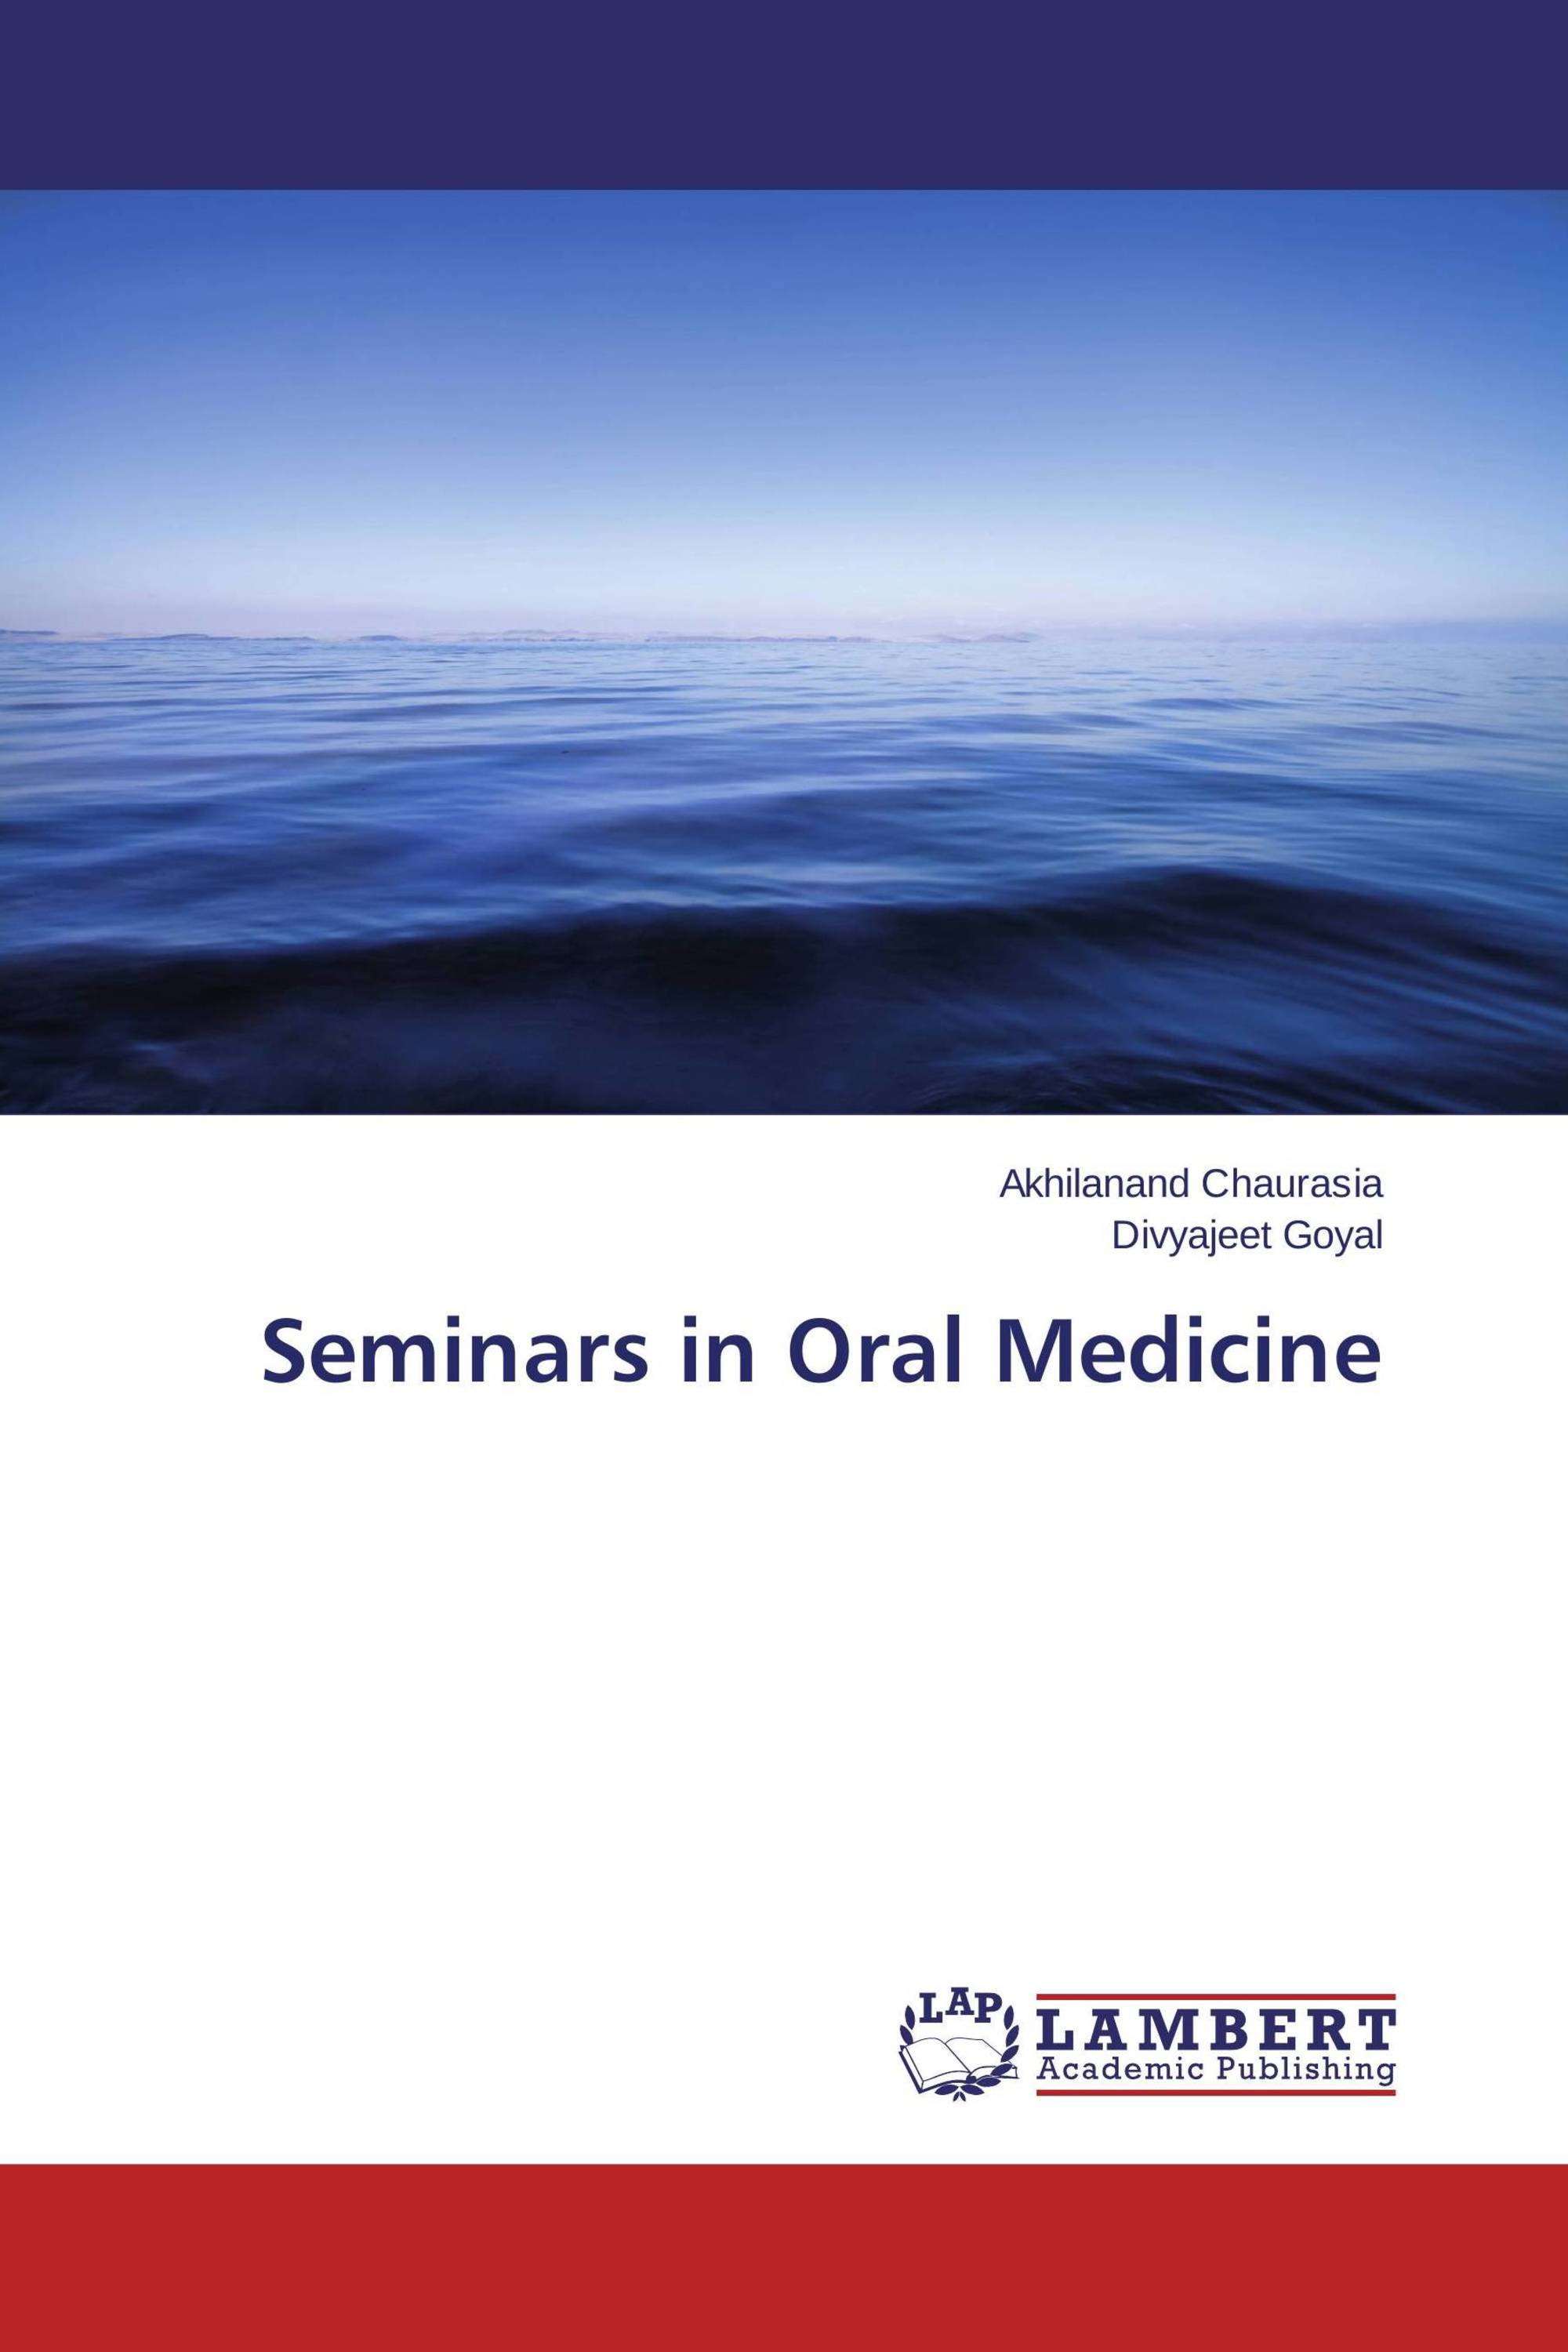 phd thesis topics in oral medicine